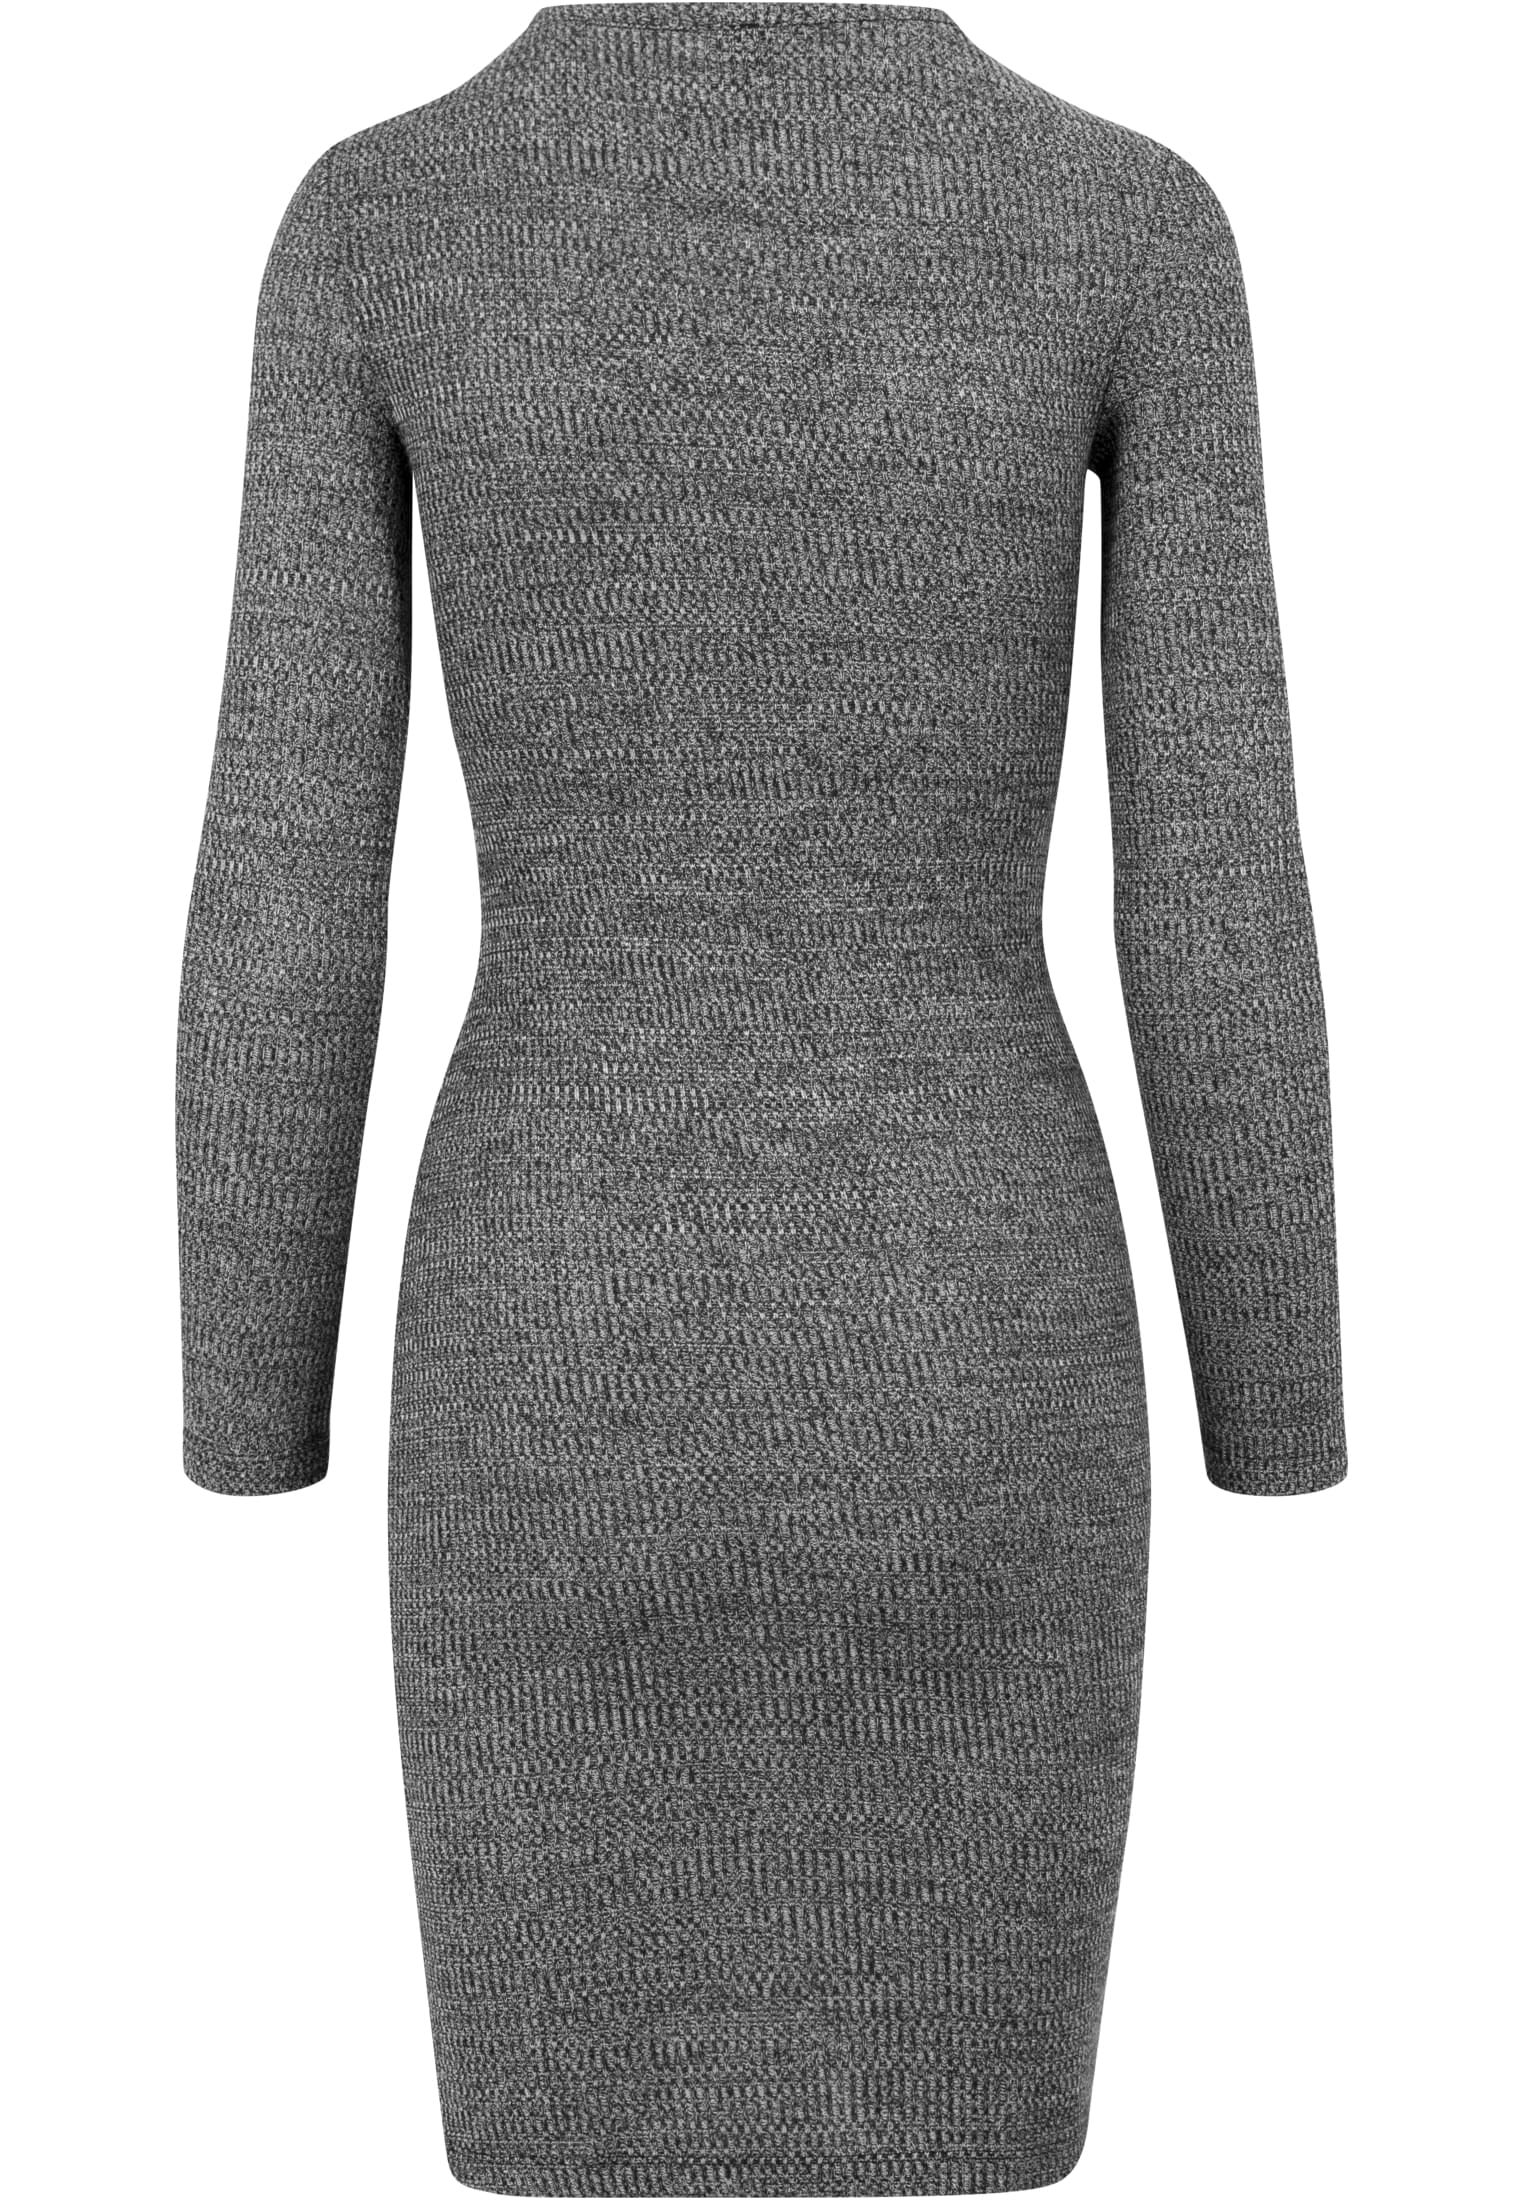 Kleider & R?cke Ladies Rib Dress in Farbe charcoal